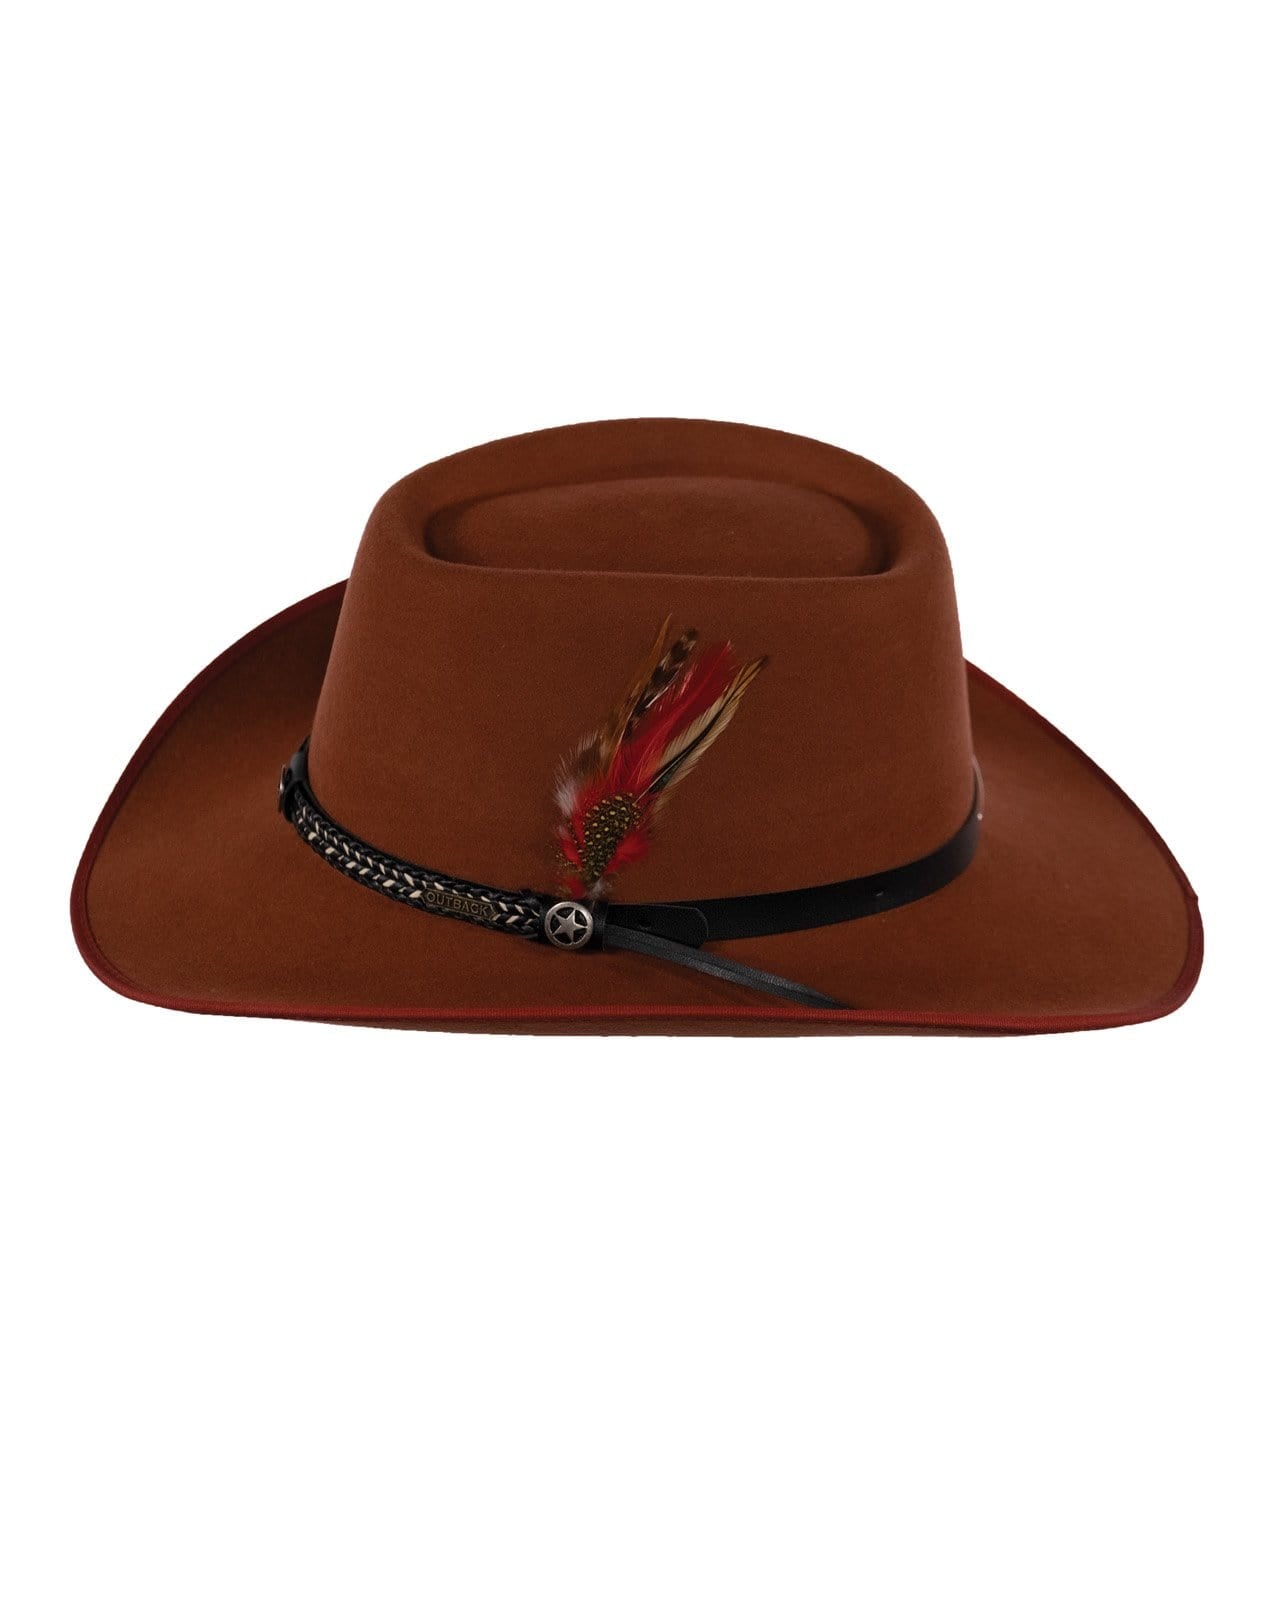 Outback Trading Company Cobra Hats